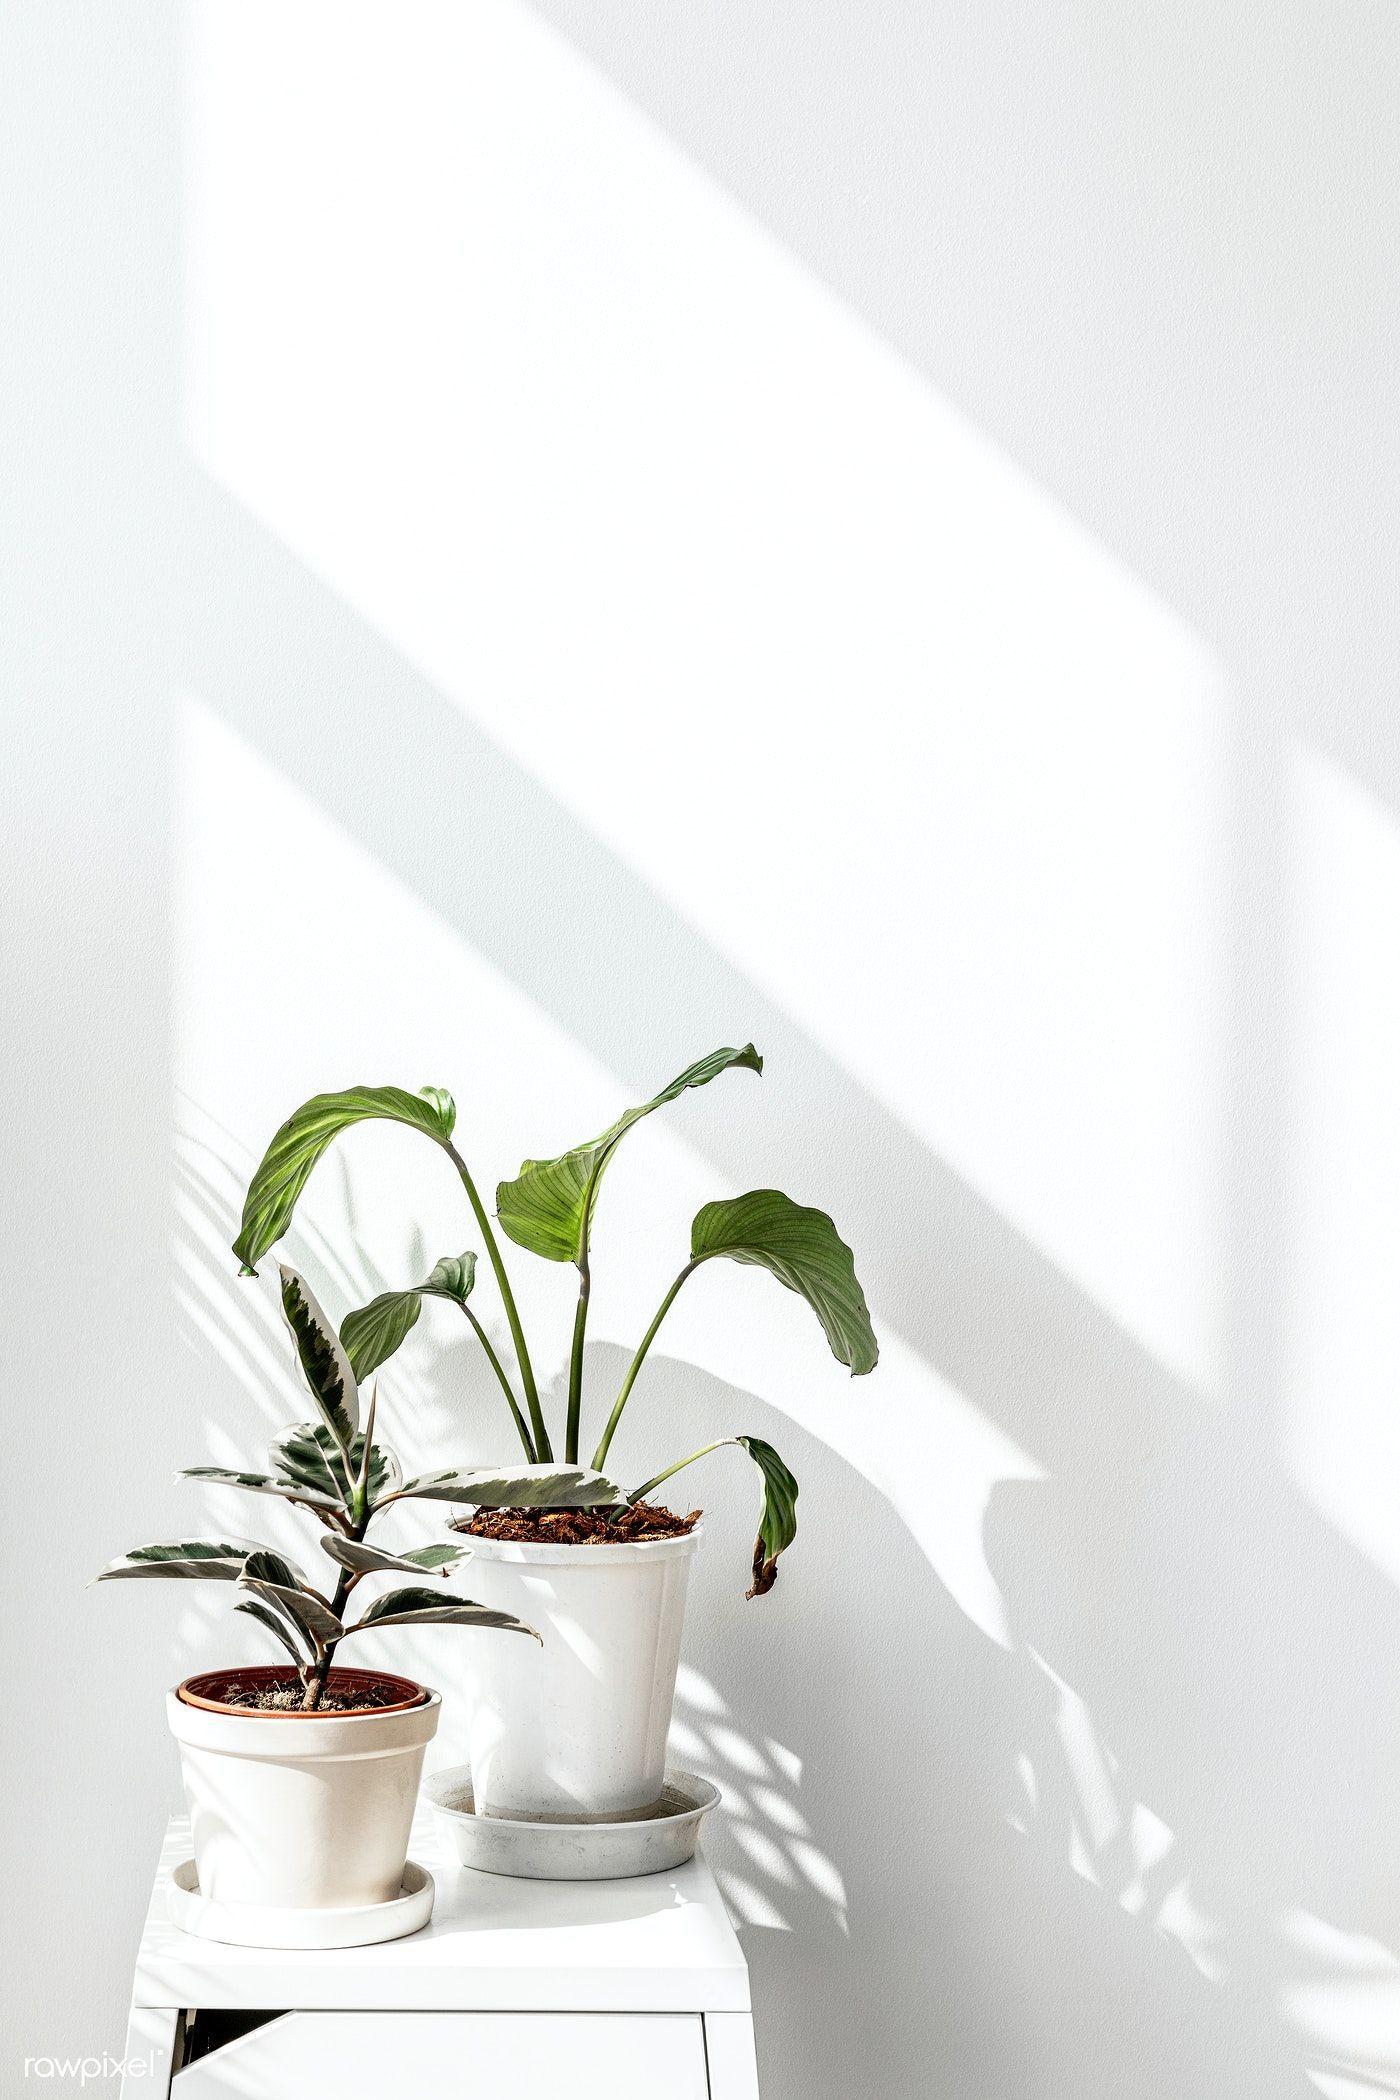 Minimalist Plant Wallpaper Images  Free Download on Freepik